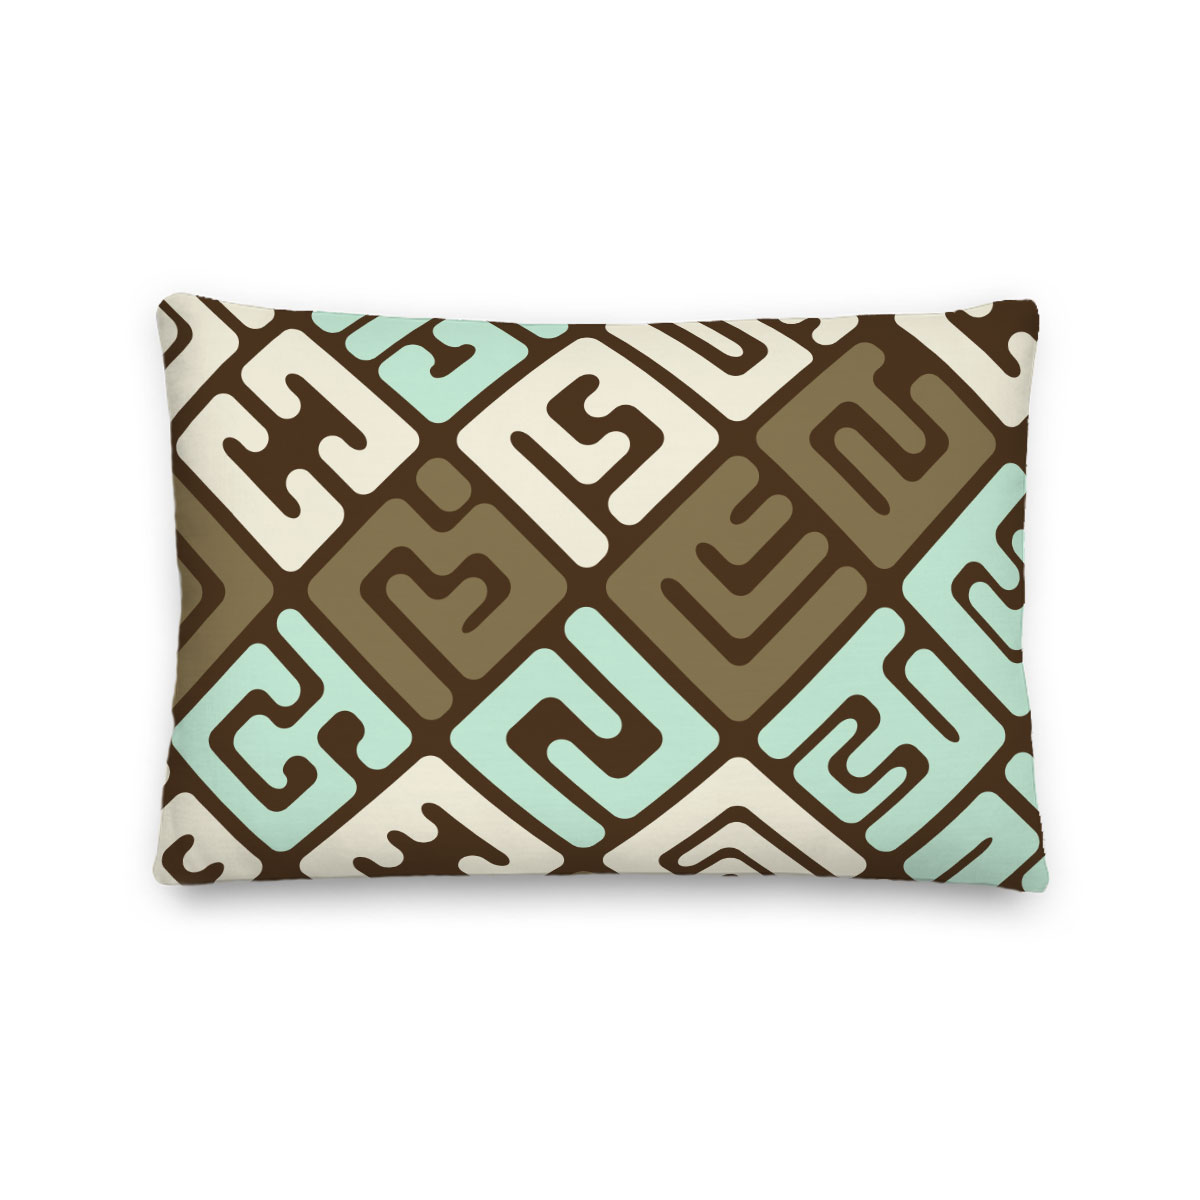 Kuba cloth inspired lumbar pillow – Earthtones with Mint Green